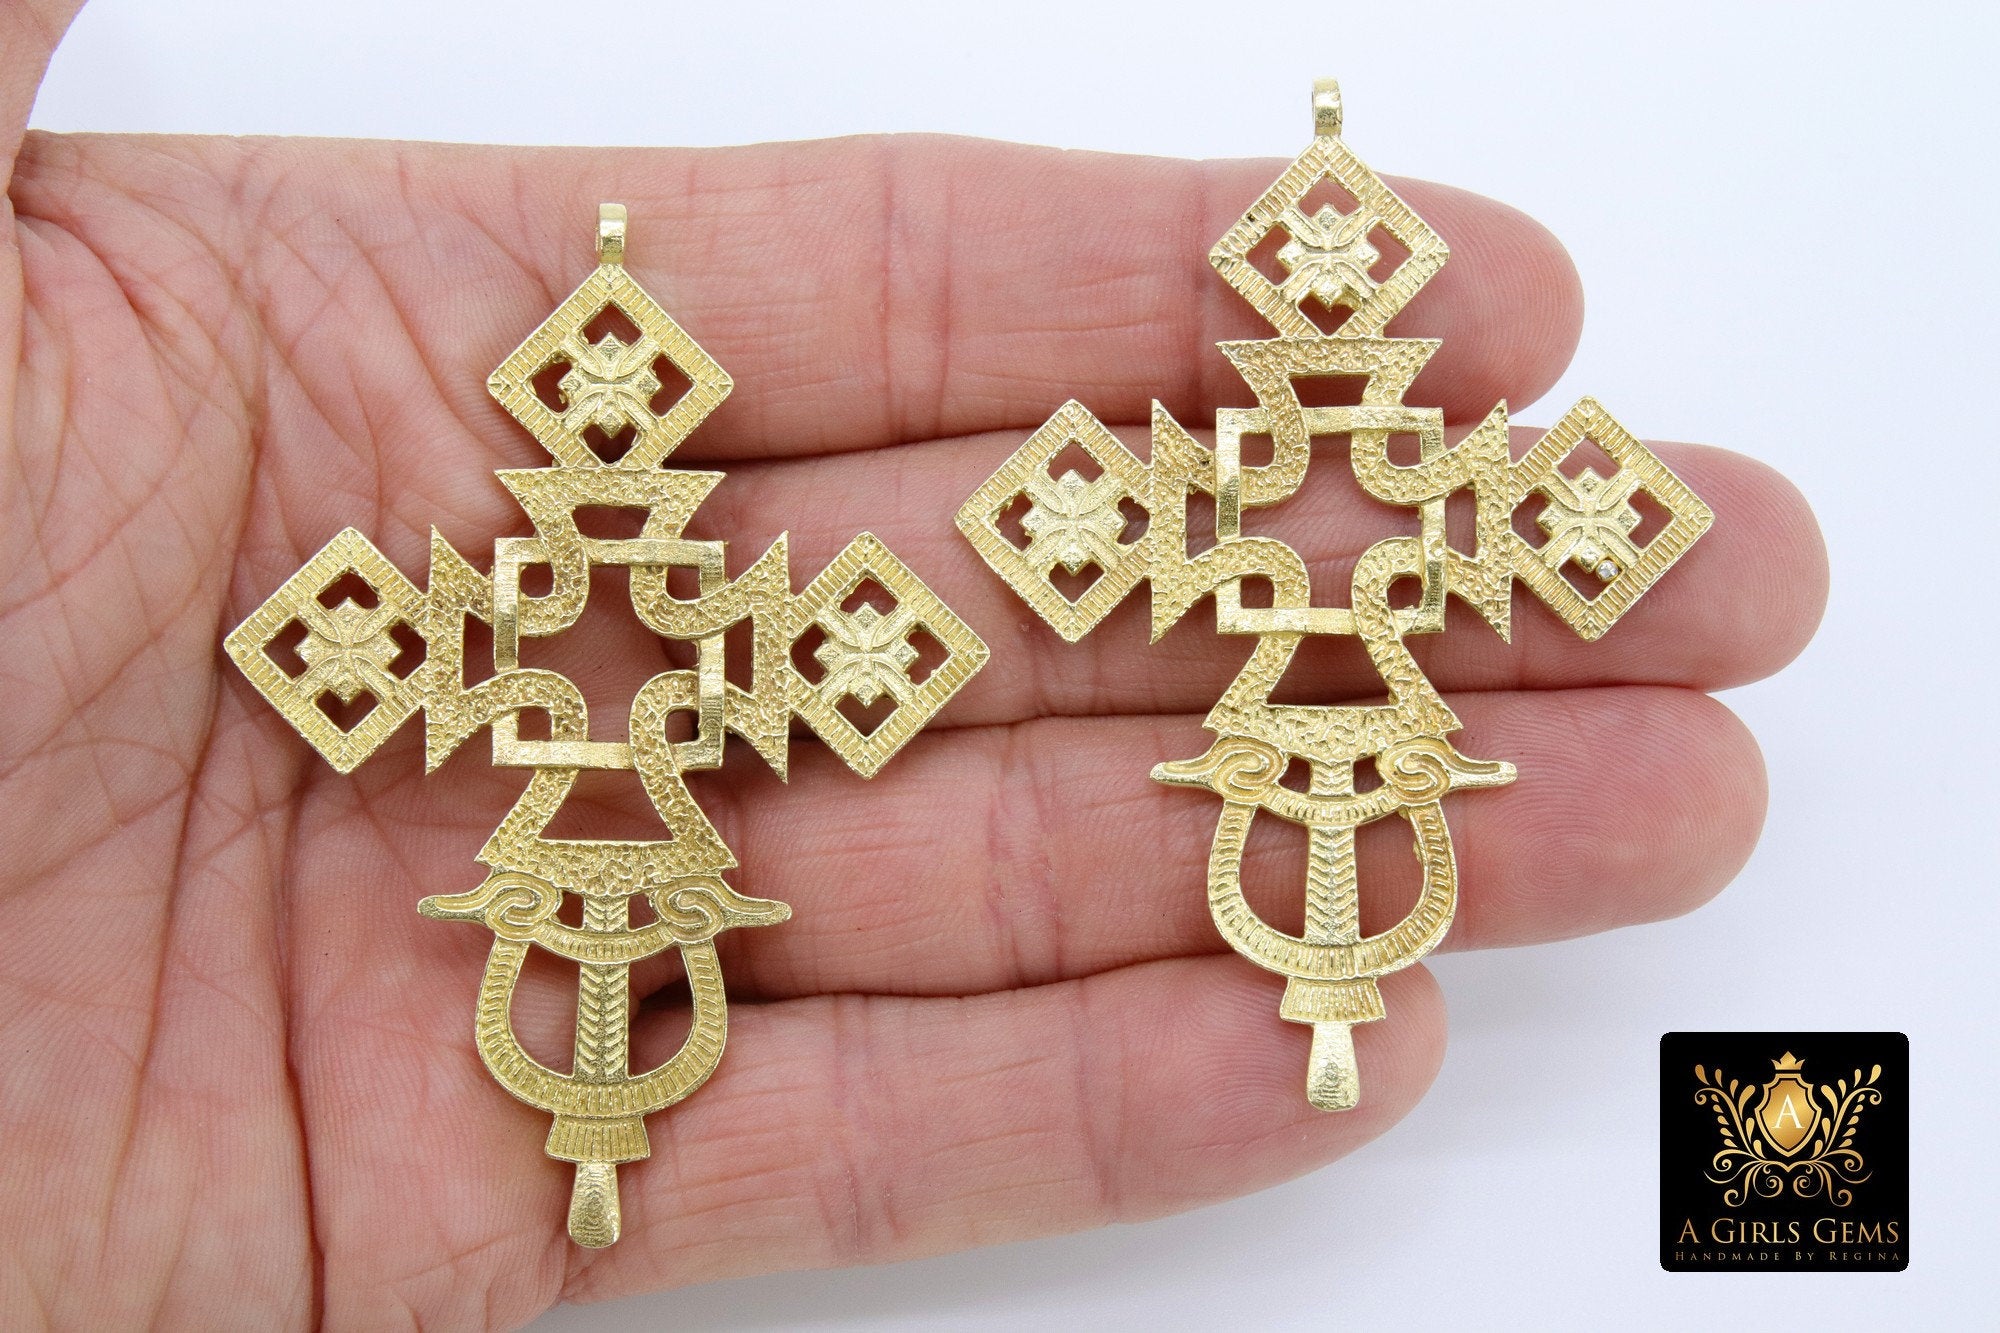 Brass Ethiopian Coptic Cross Jewelry Pendant African Cross Gold Charm Pendants Religious Jewelry Making Supplies